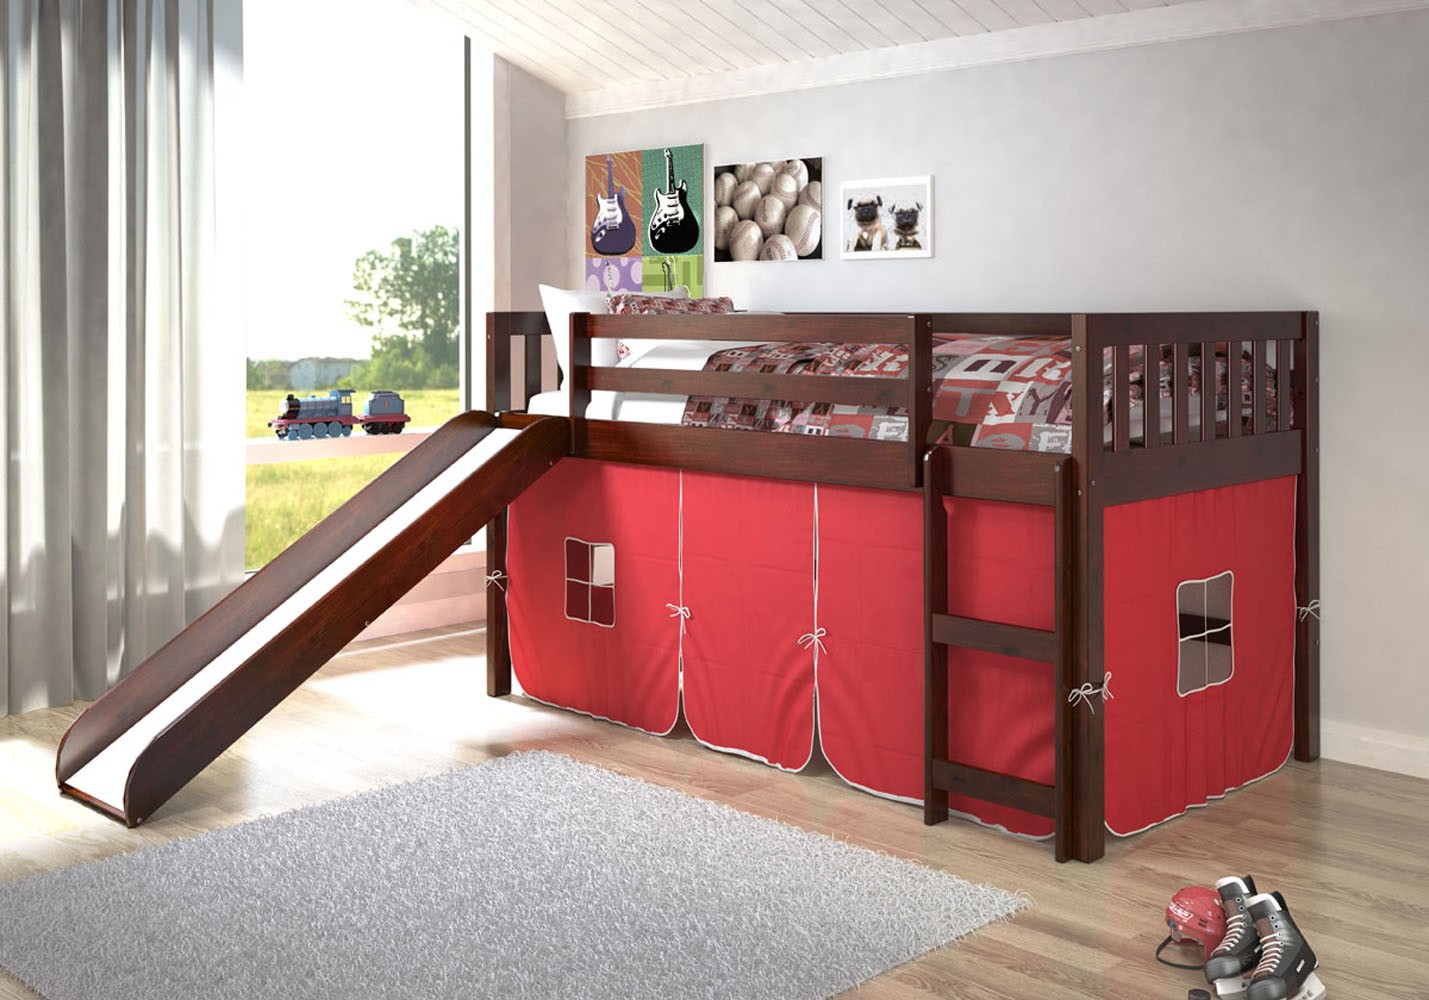 Novelty Bunk Beds For Boys Kfs S, Bunk Beds For Kids Boys